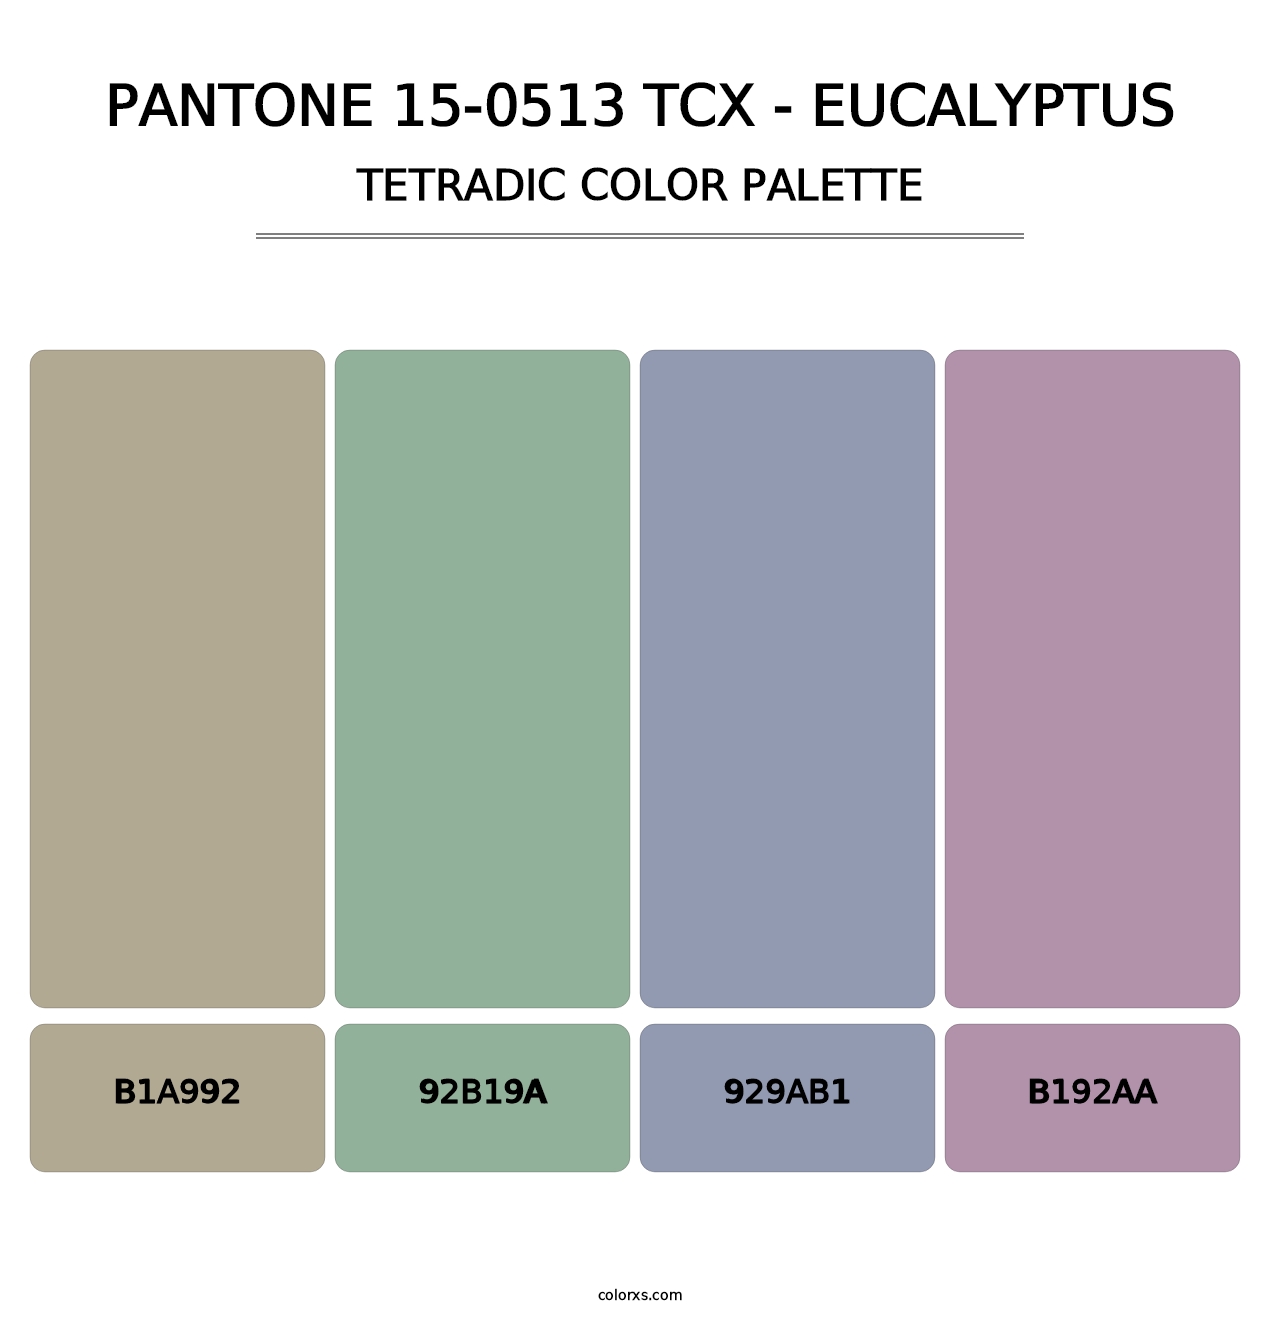 PANTONE 15-0513 TCX - Eucalyptus - Tetradic Color Palette